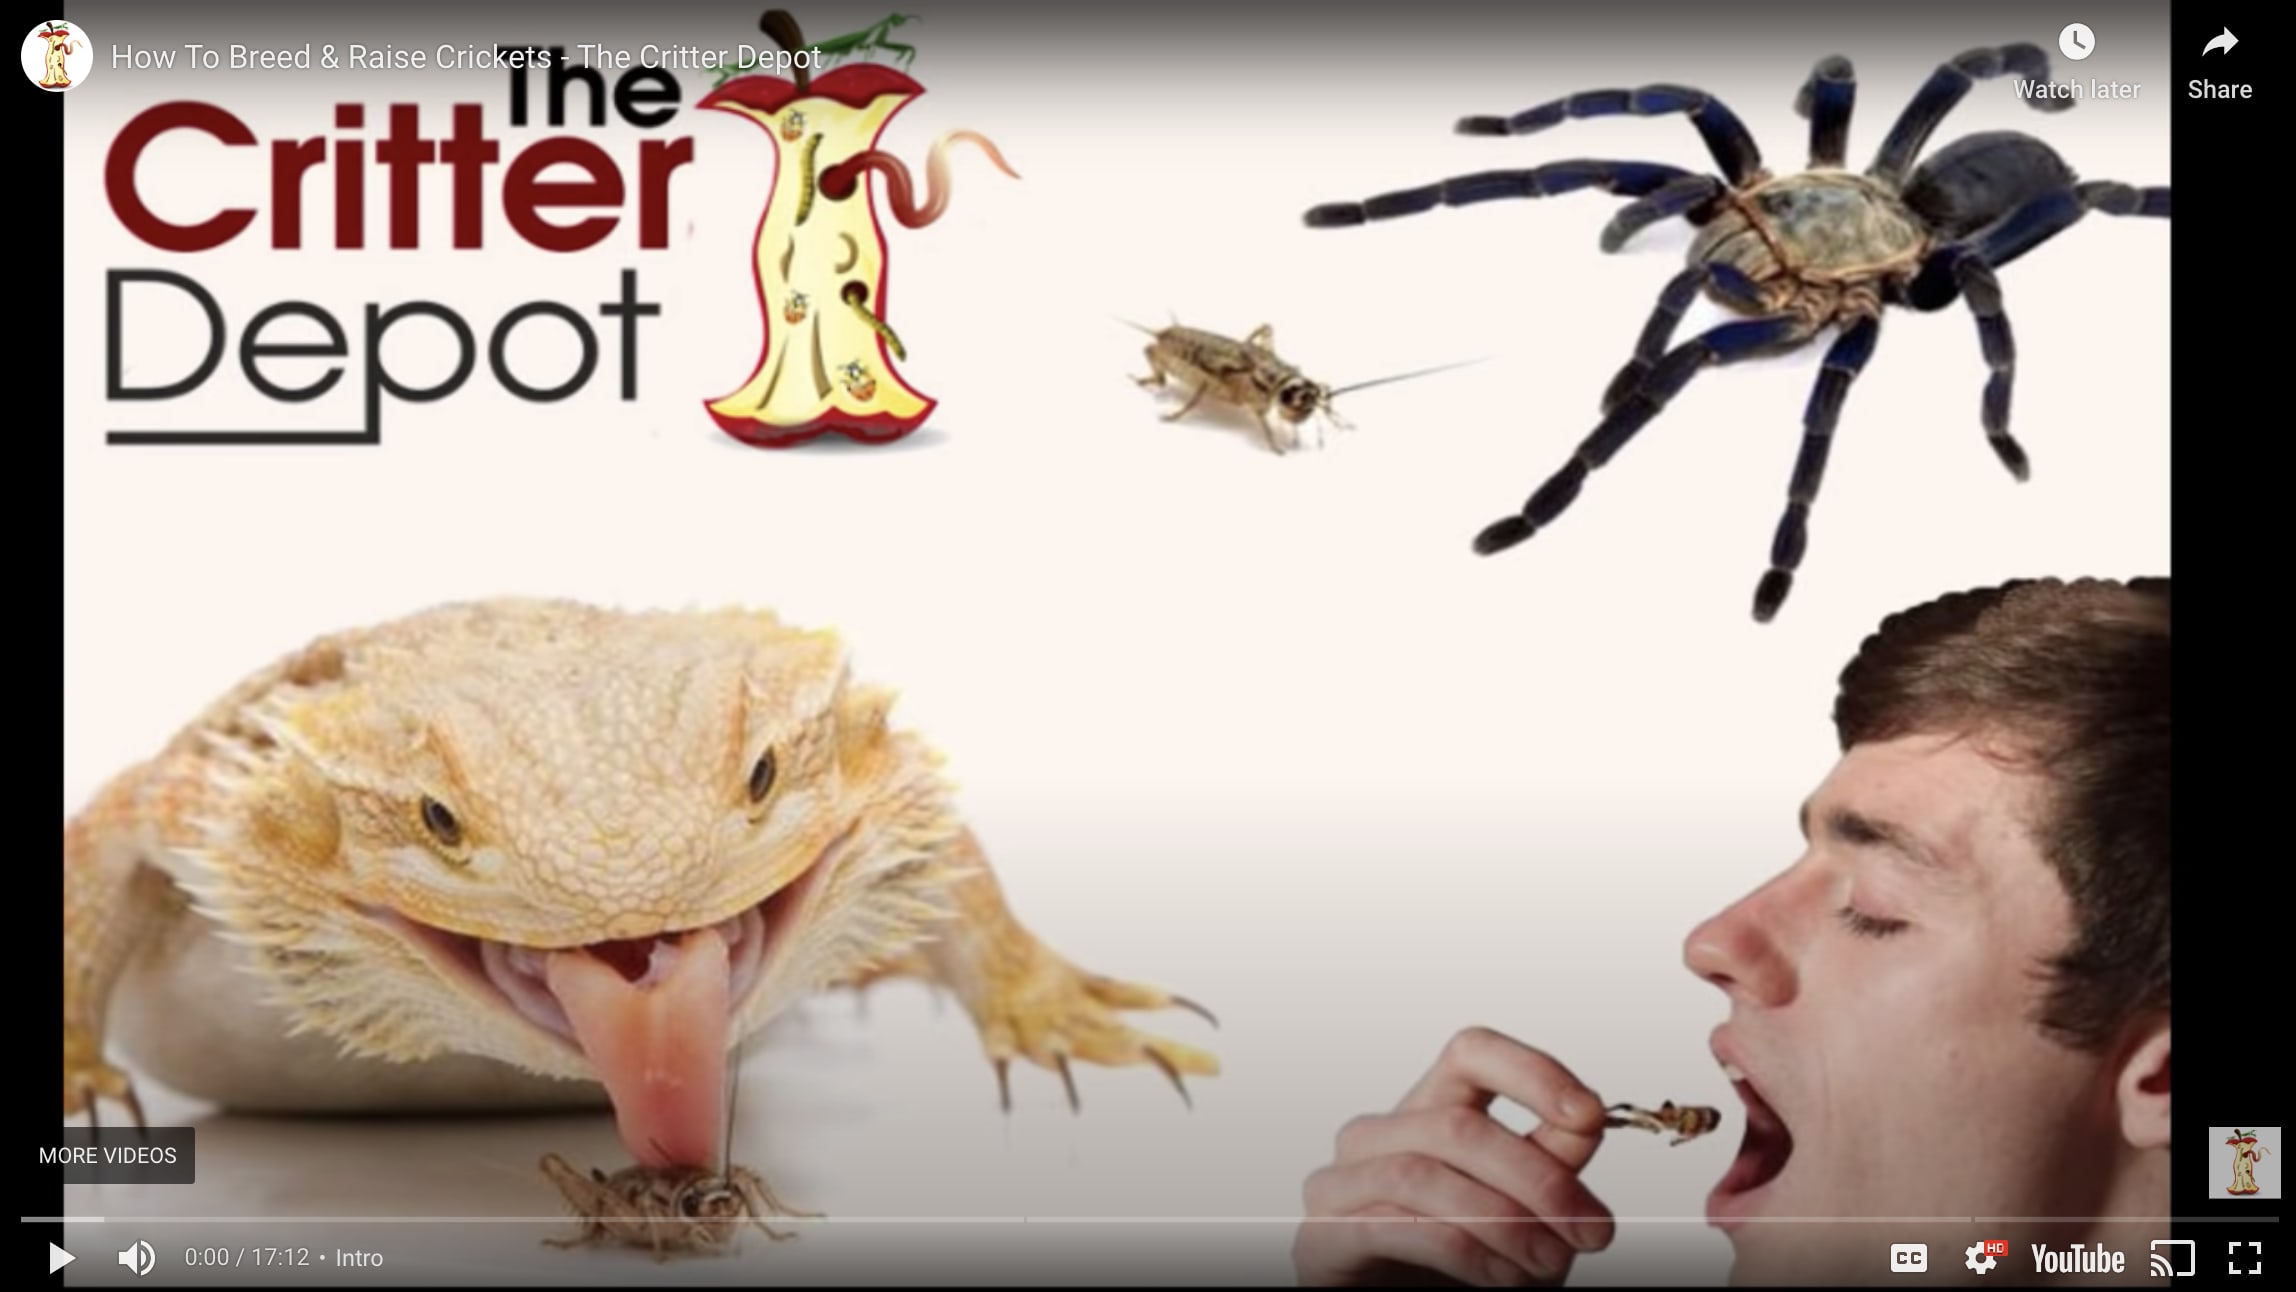 Screenshot of The Critter Depot’s YouTube video on breeding crickets